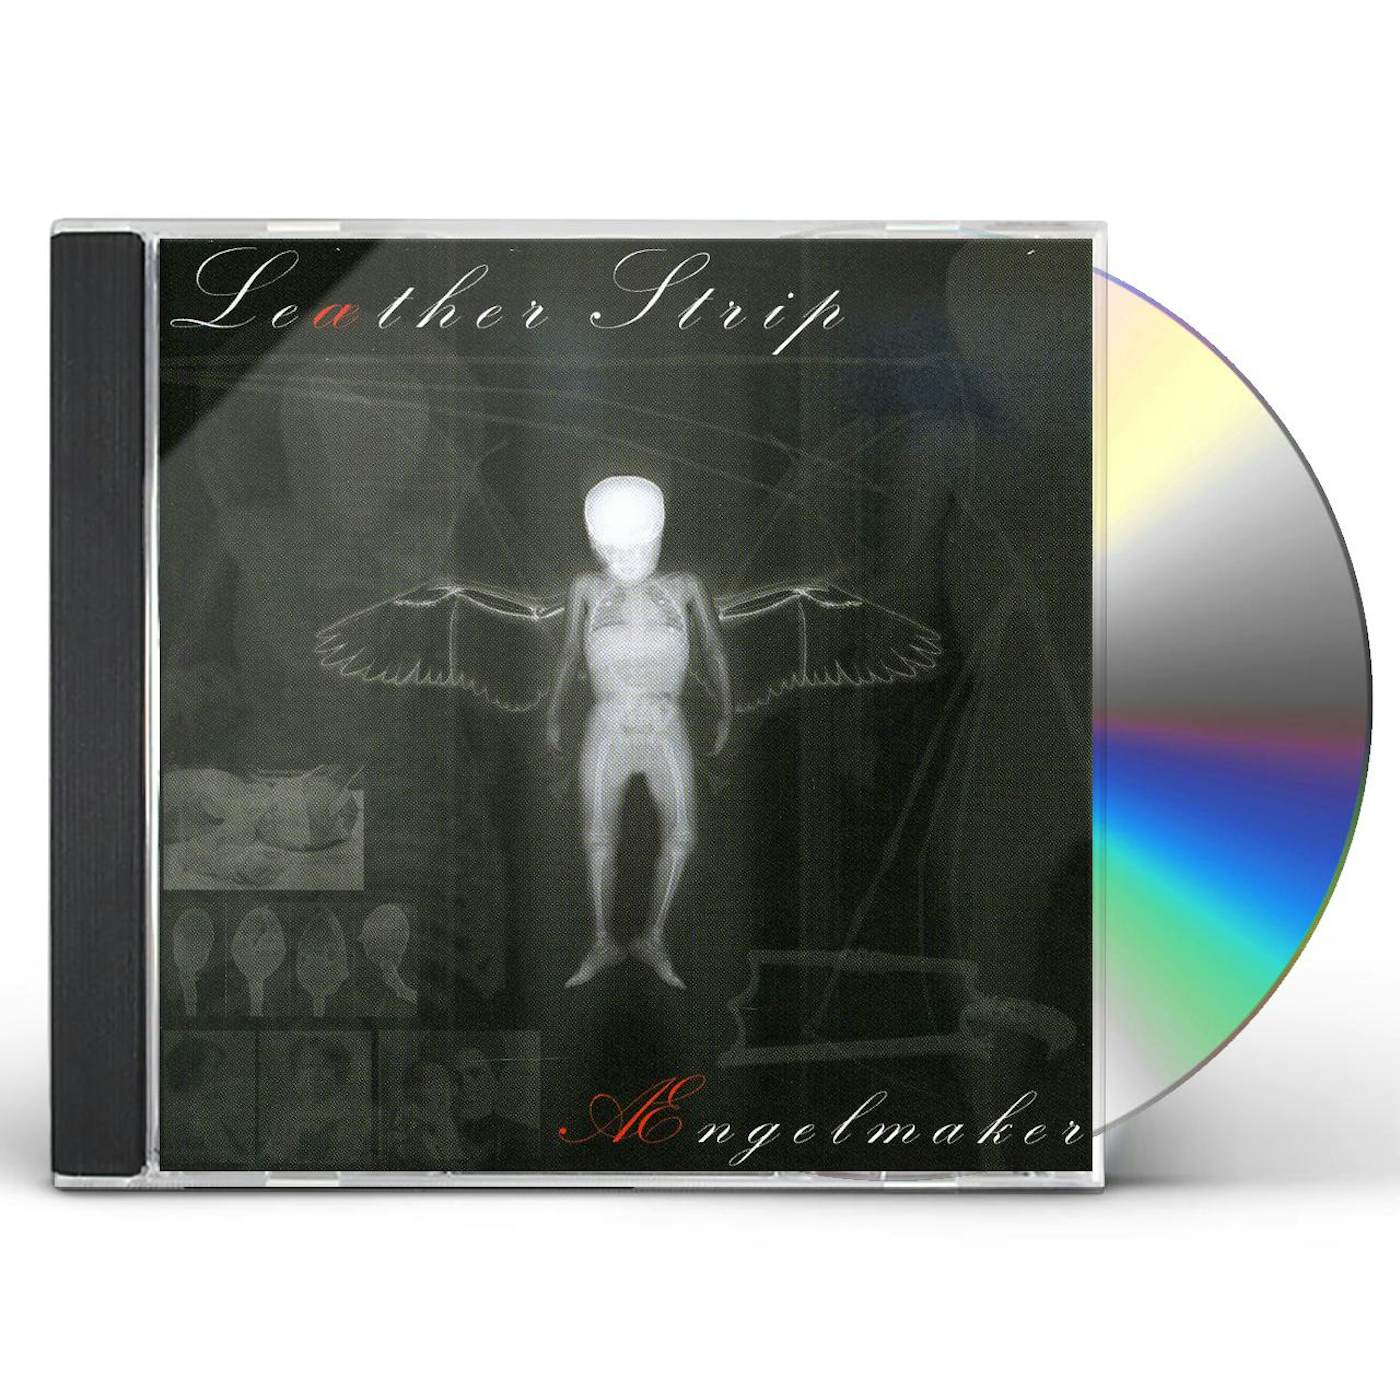 Leaether Strip AENGELMAKER CD